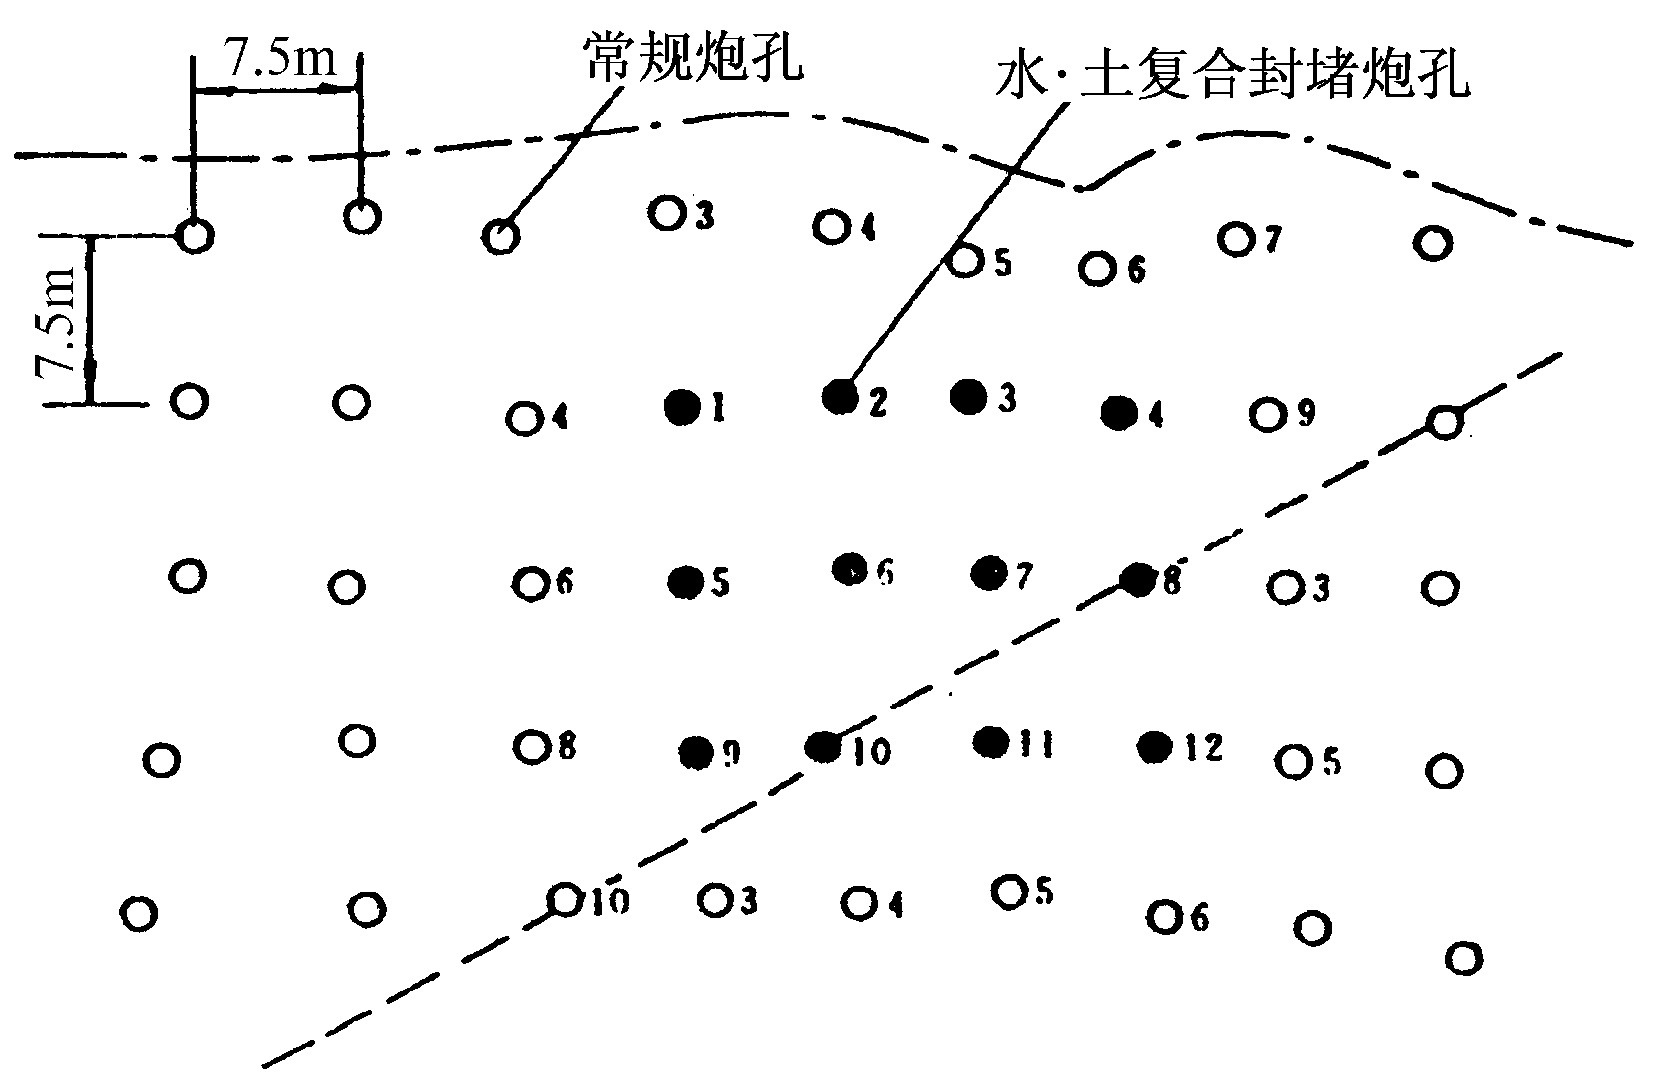 图6 多排炮孔水-土复合封堵分布
Fig.6 Arrangement of multi-row blastholes with
water-soil compound stemming